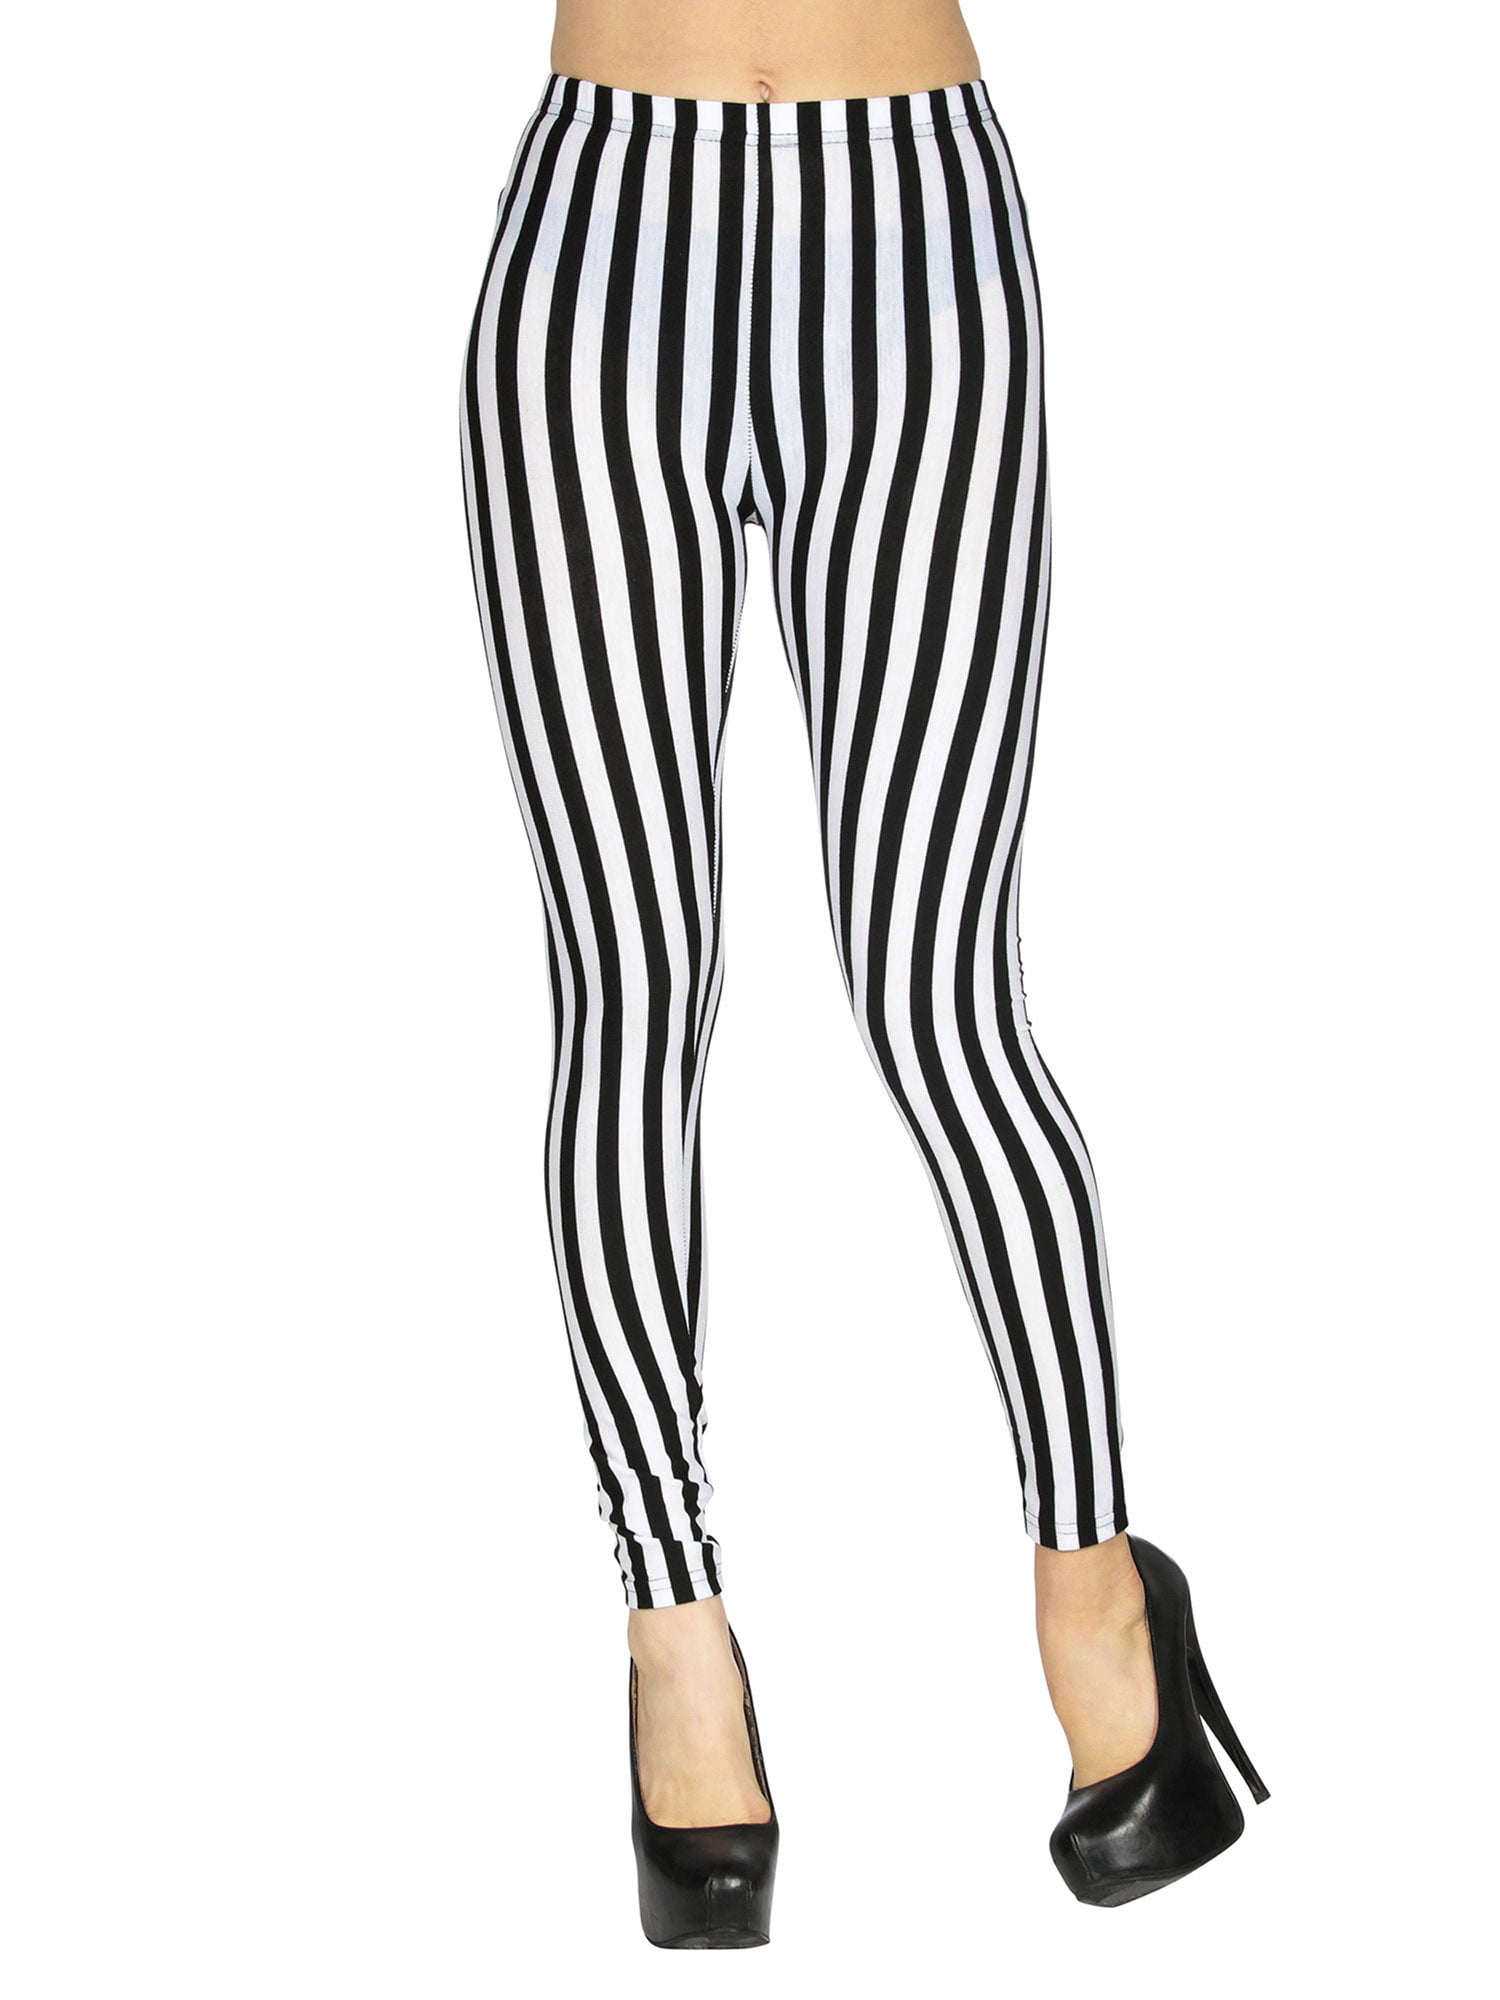 Hot Fashion Women's Girls Black & White Stripe Trousers Footless Skinny Legging